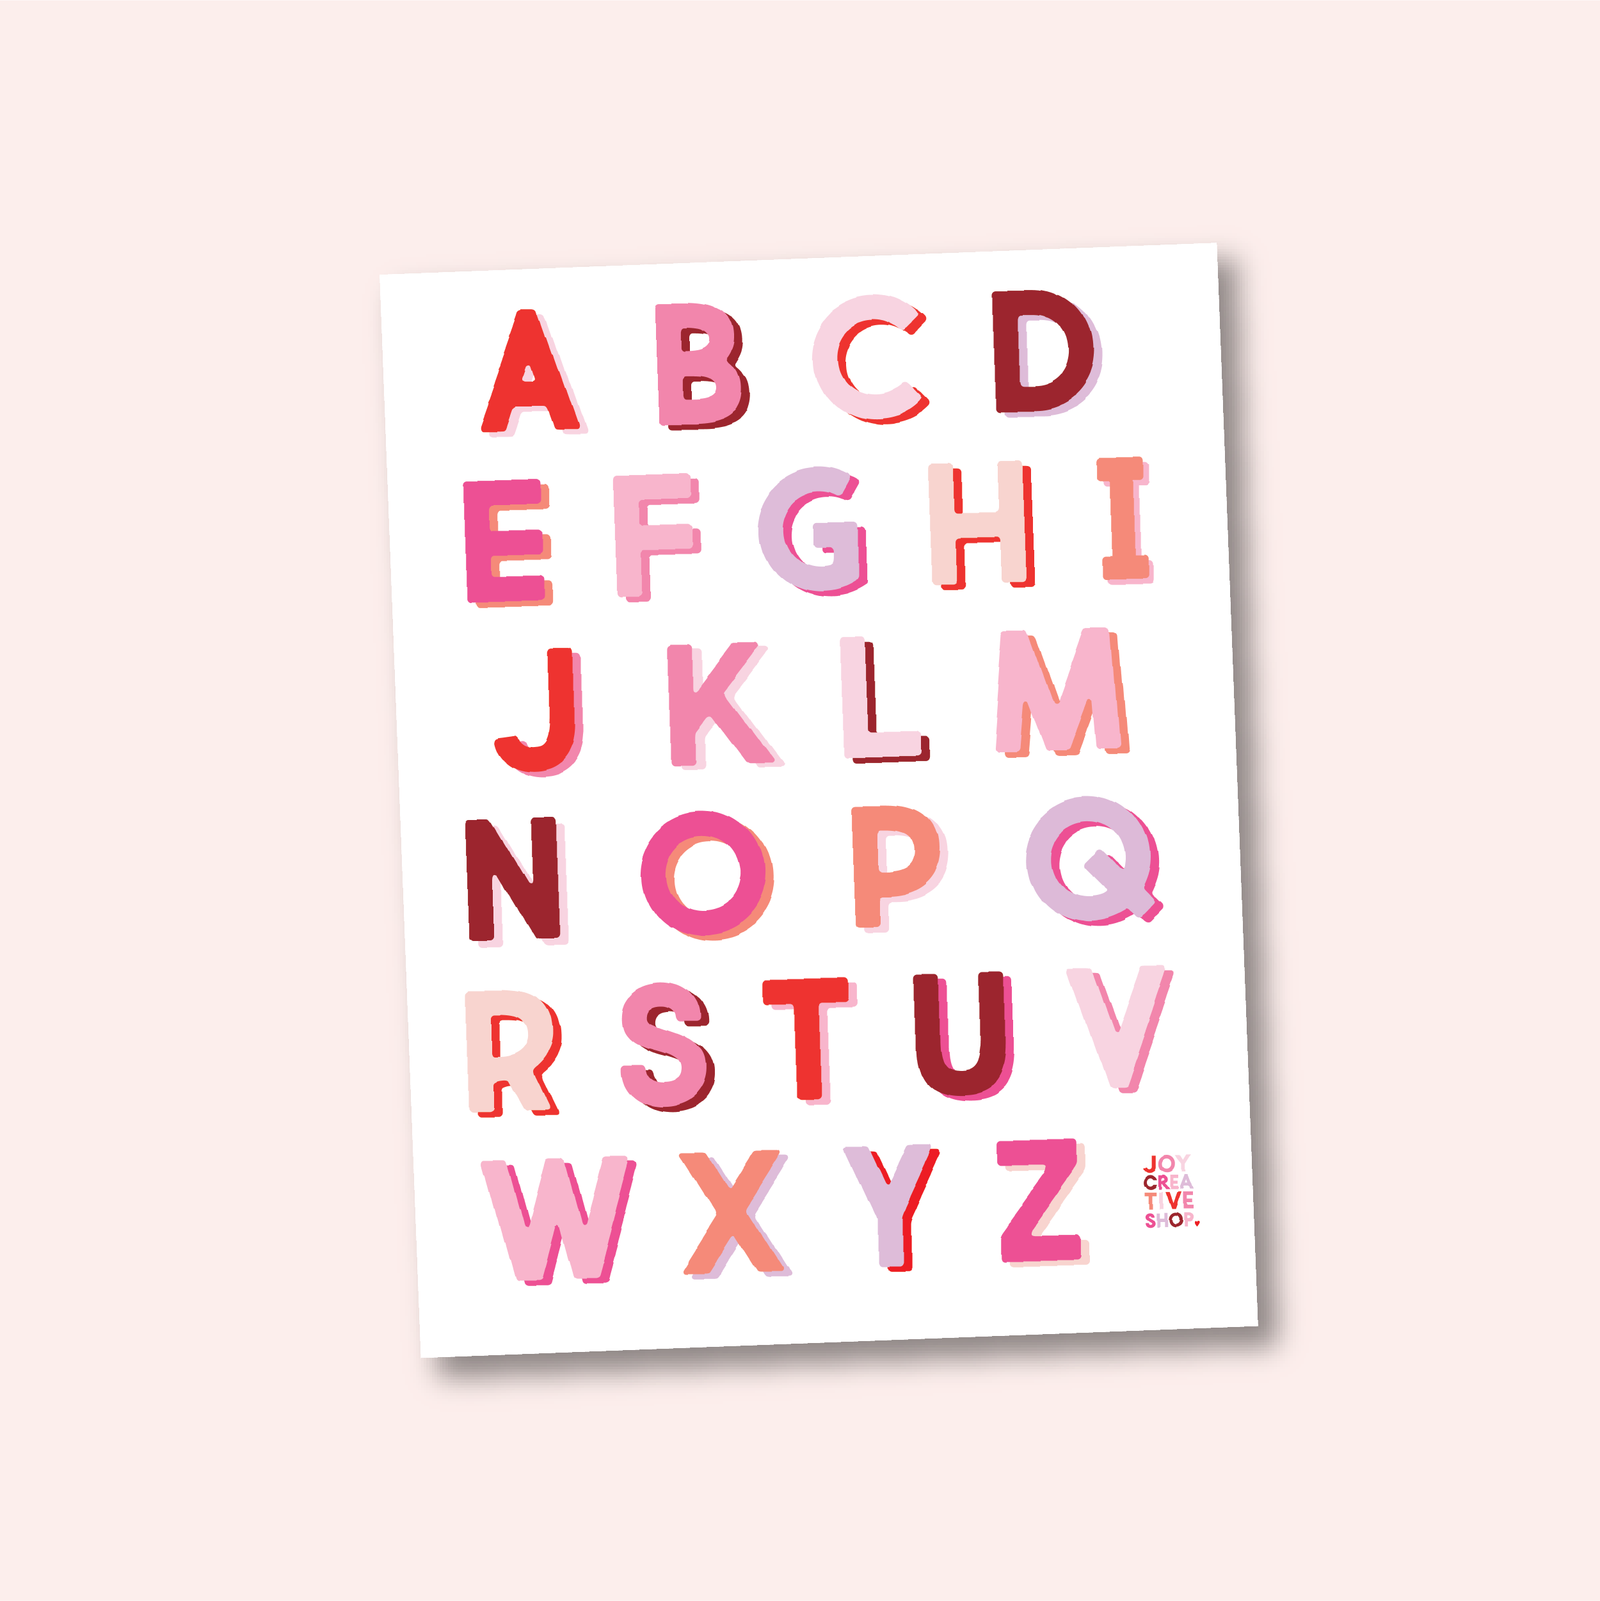 Vinyl Alphabet Stickers - Single Letter Sheets